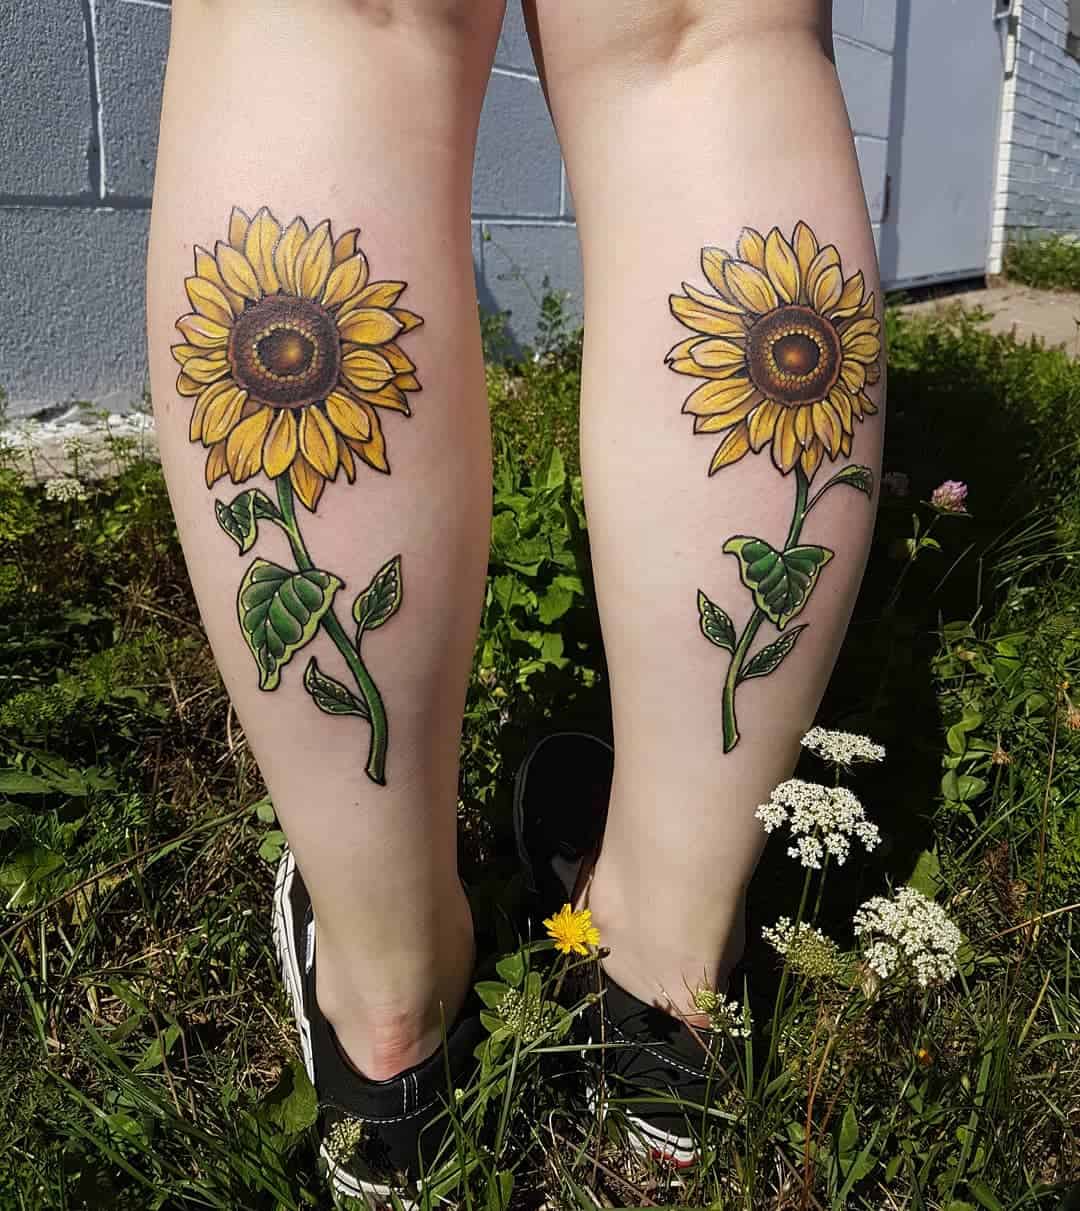 Bright Sunflower tattoo on leg